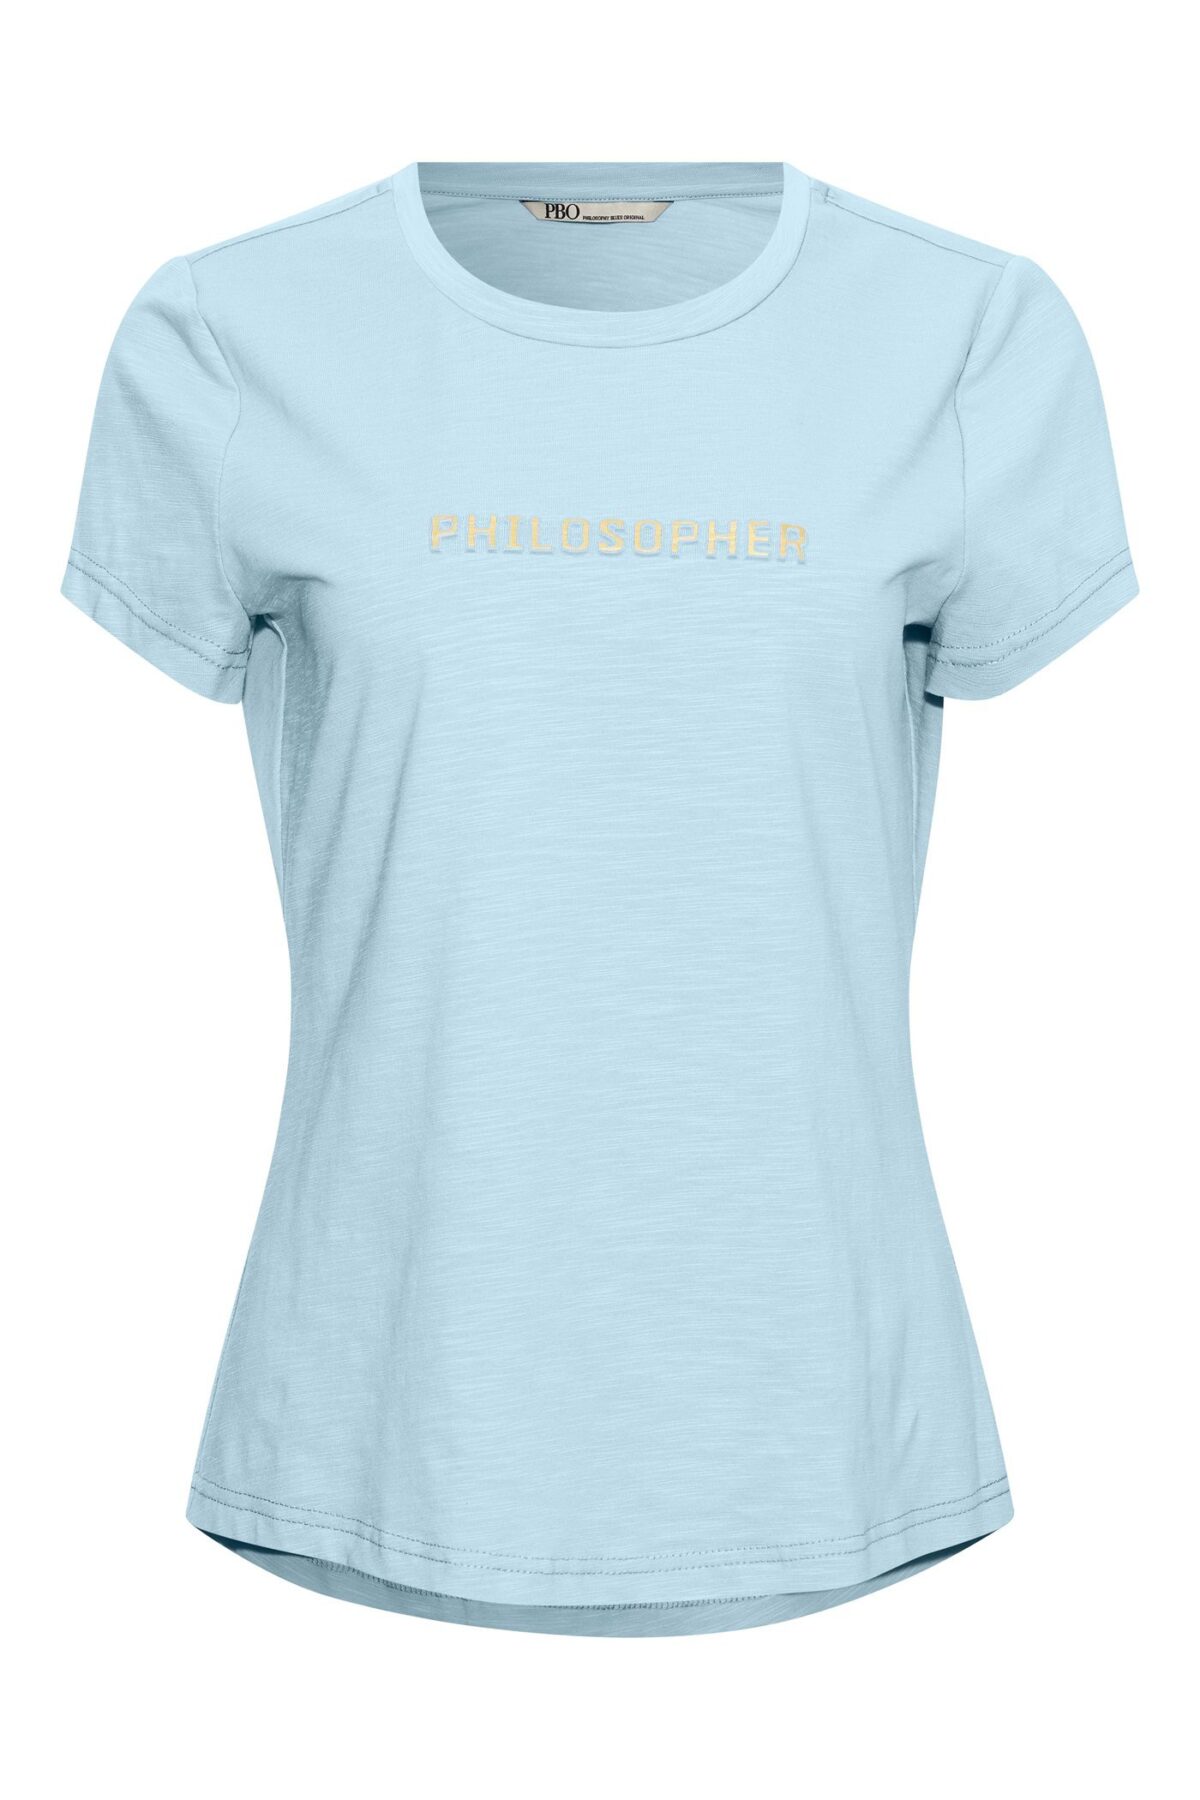 PBO Milogold T shirt Dream blue 1